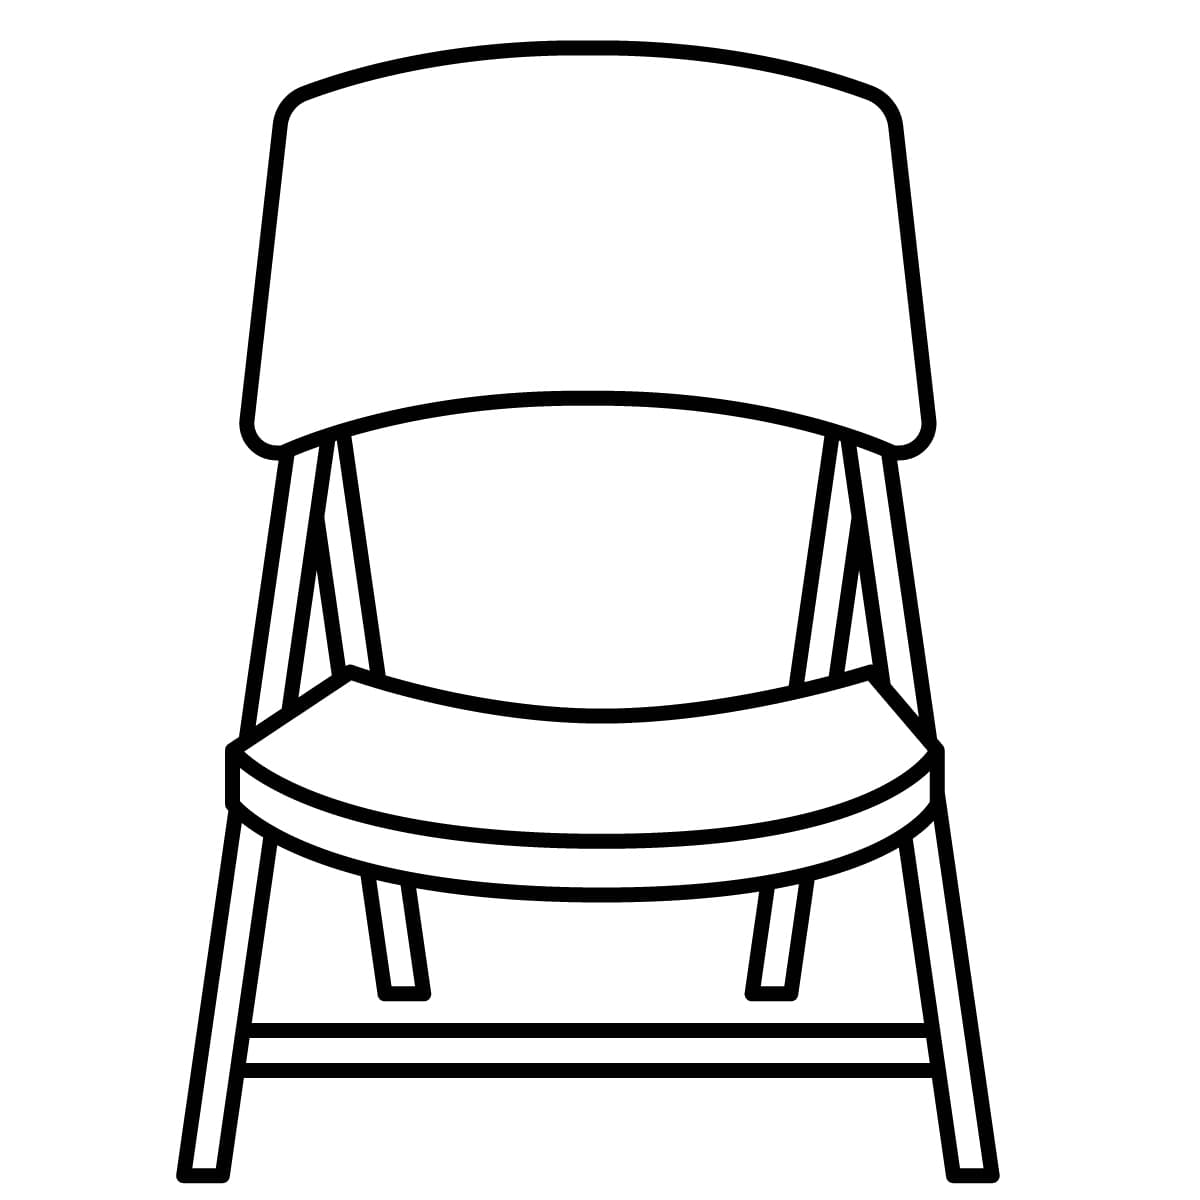 Imagen de silla para colorear